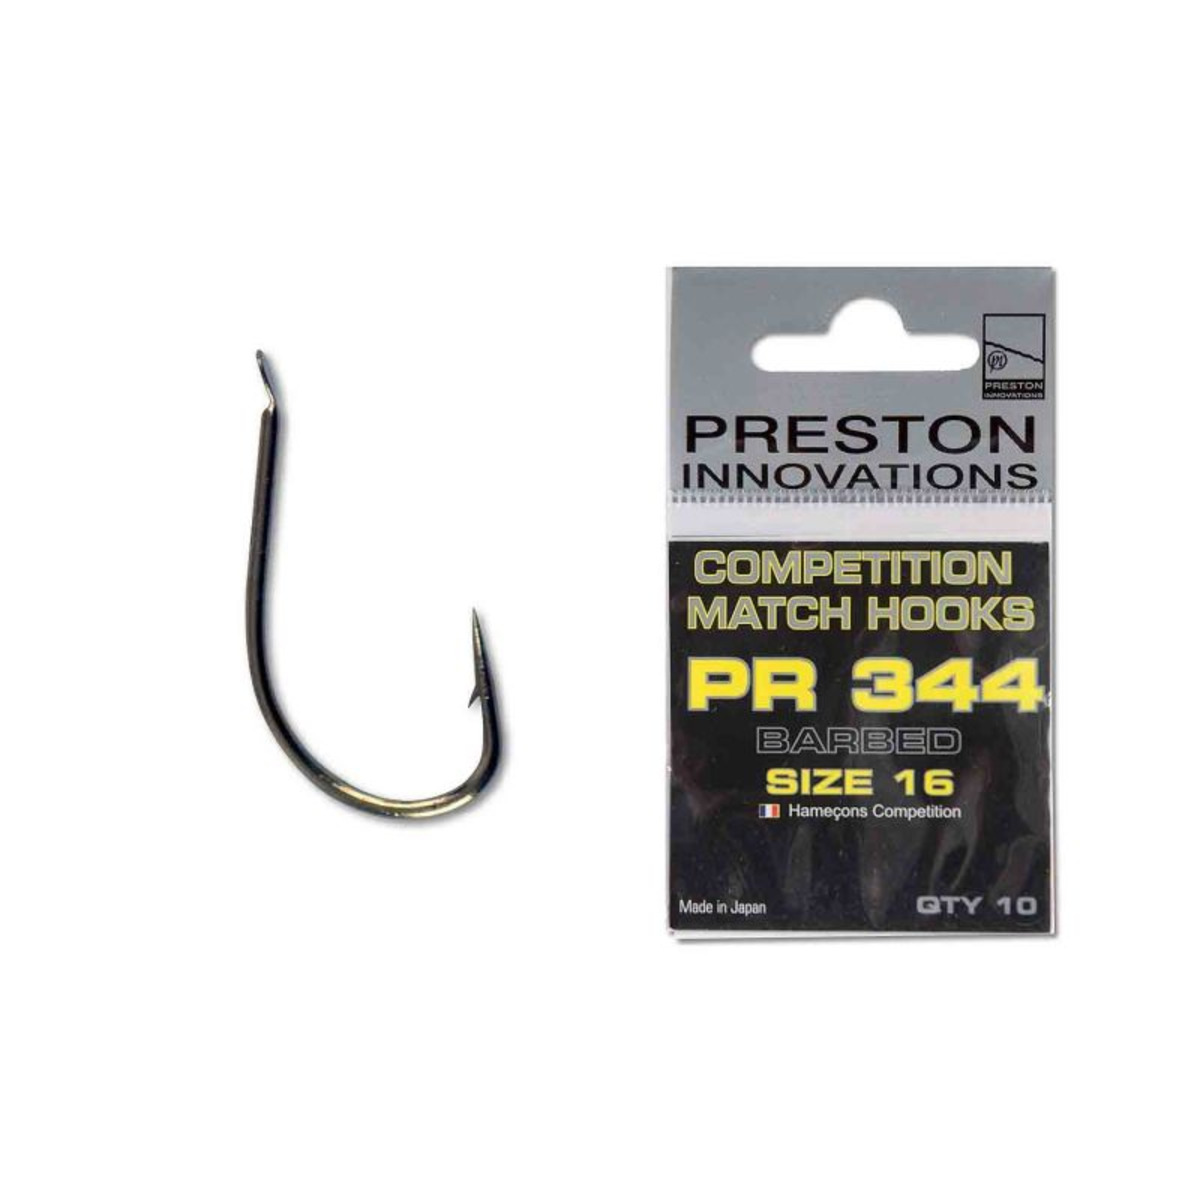 Preston Competition Match Hooks PR 344 - 12